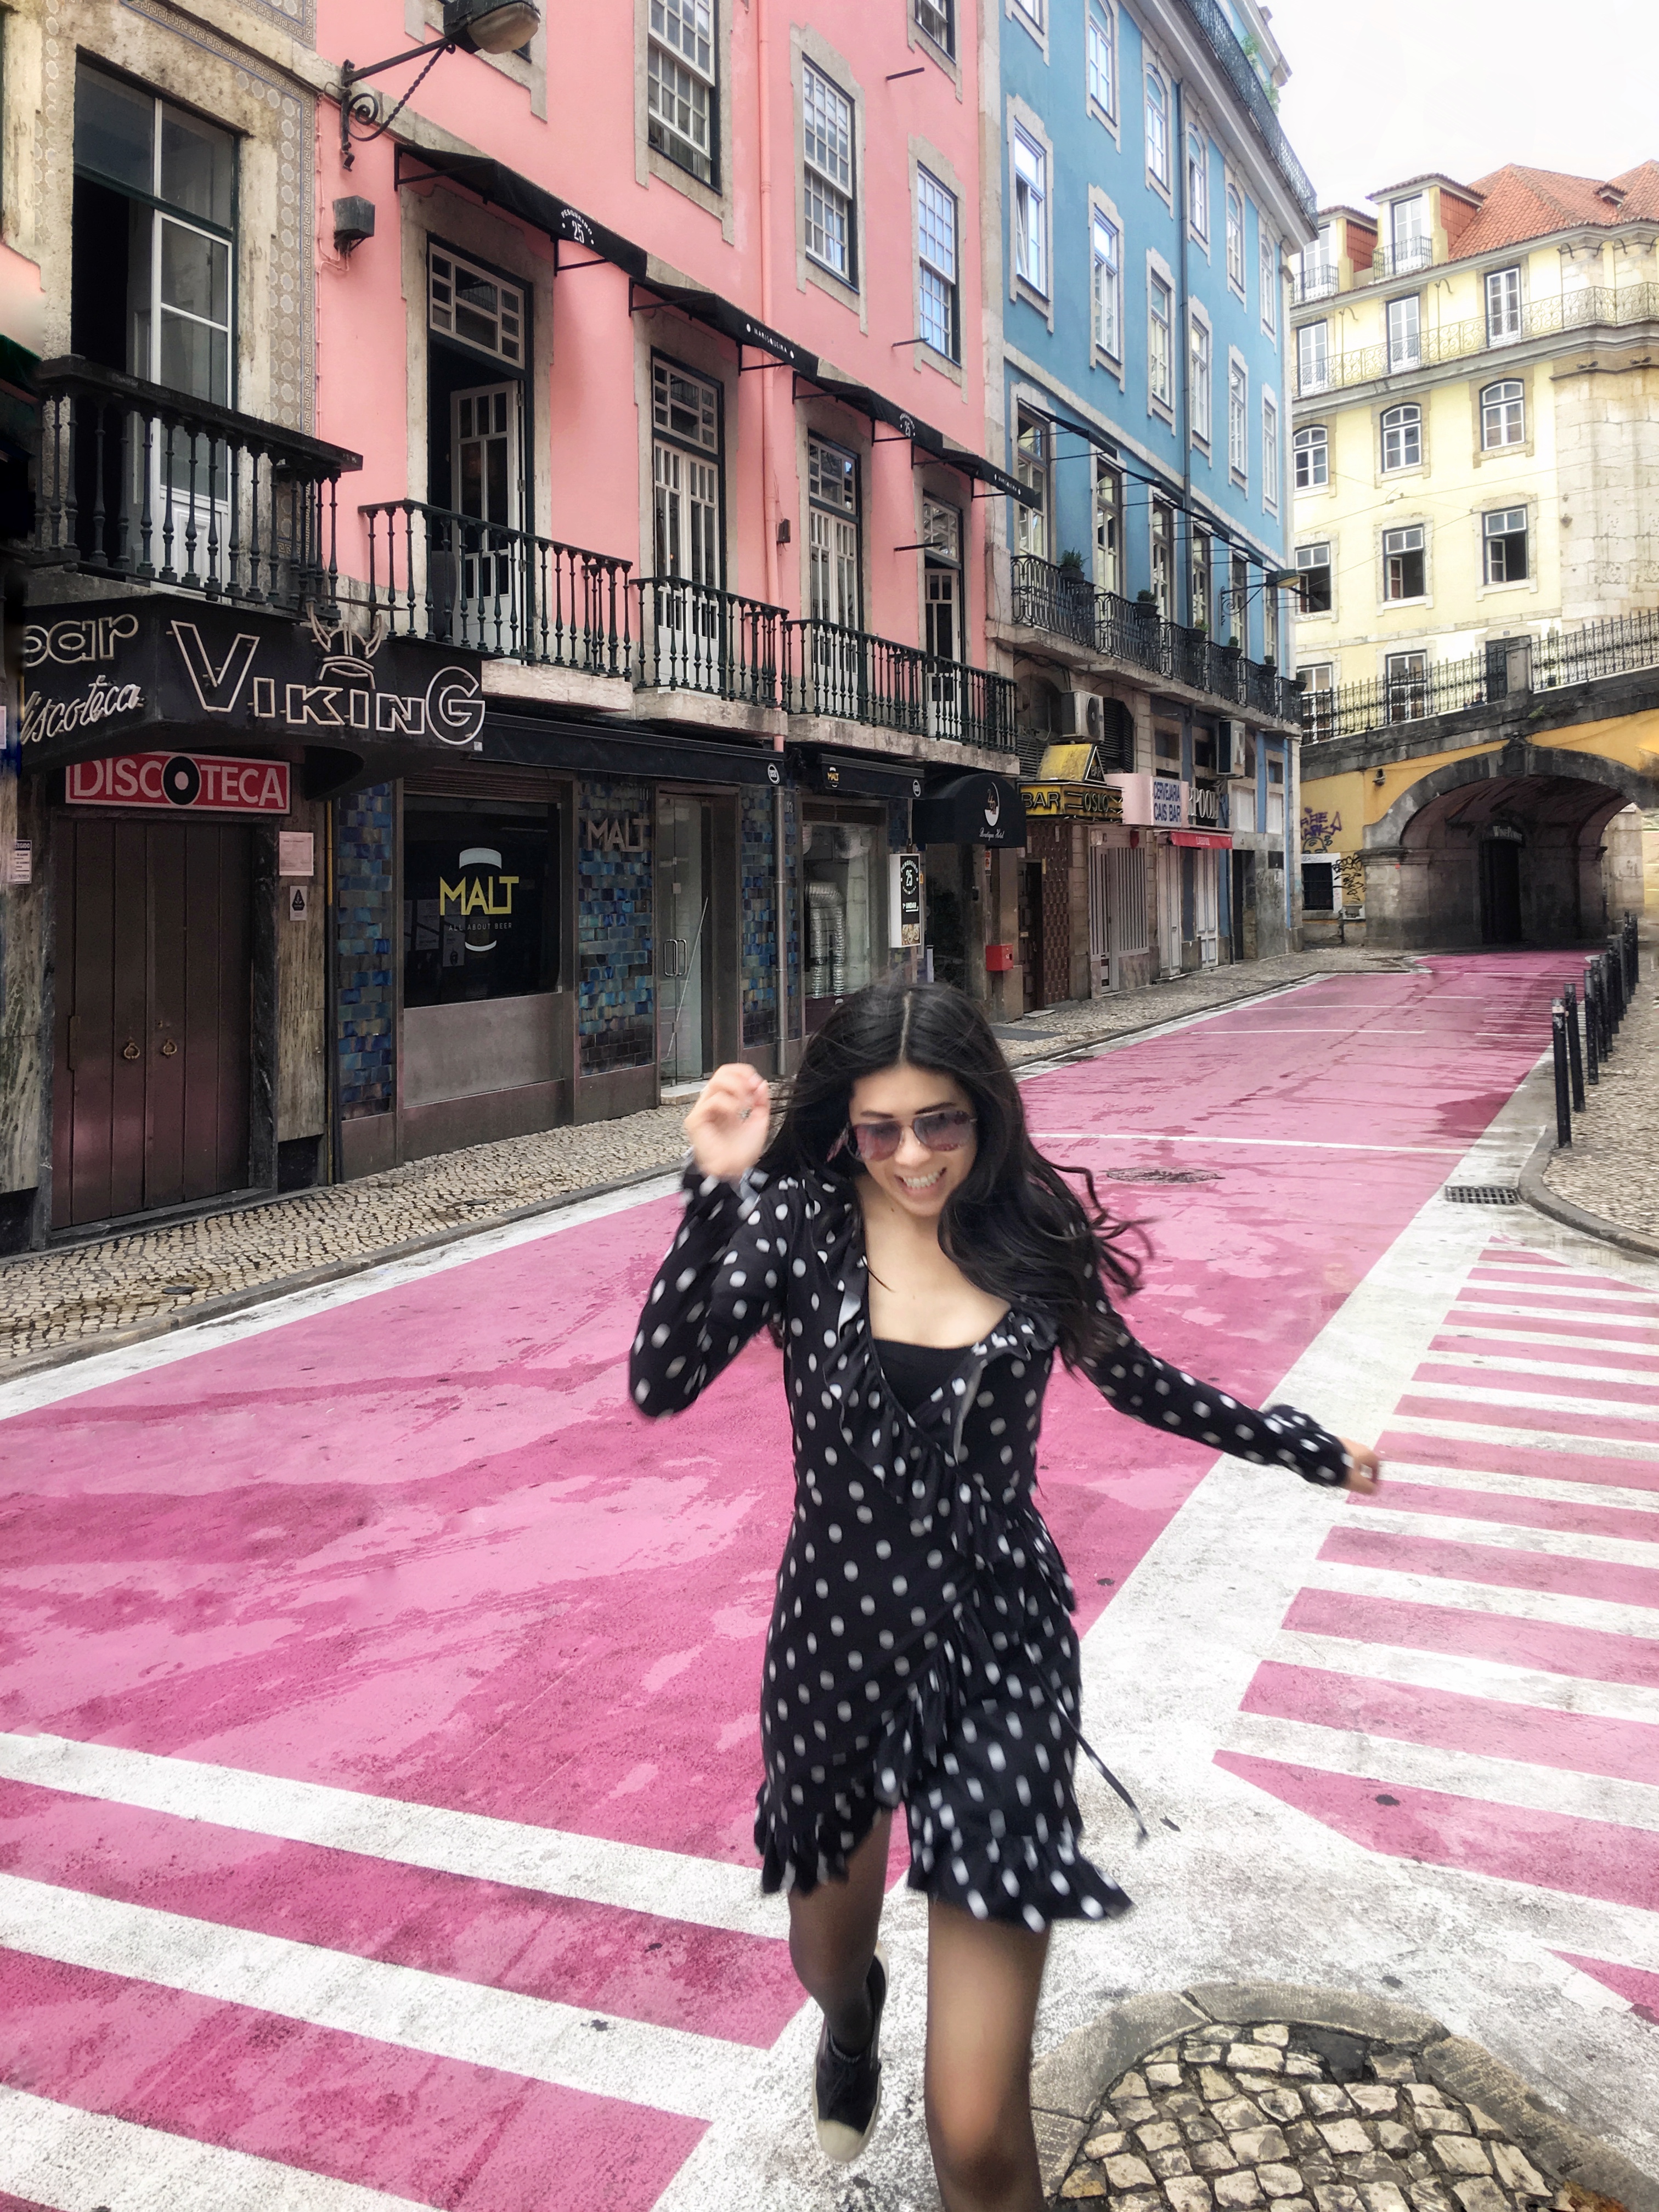 Rua Nova do Carvalho pink street in Lisbon